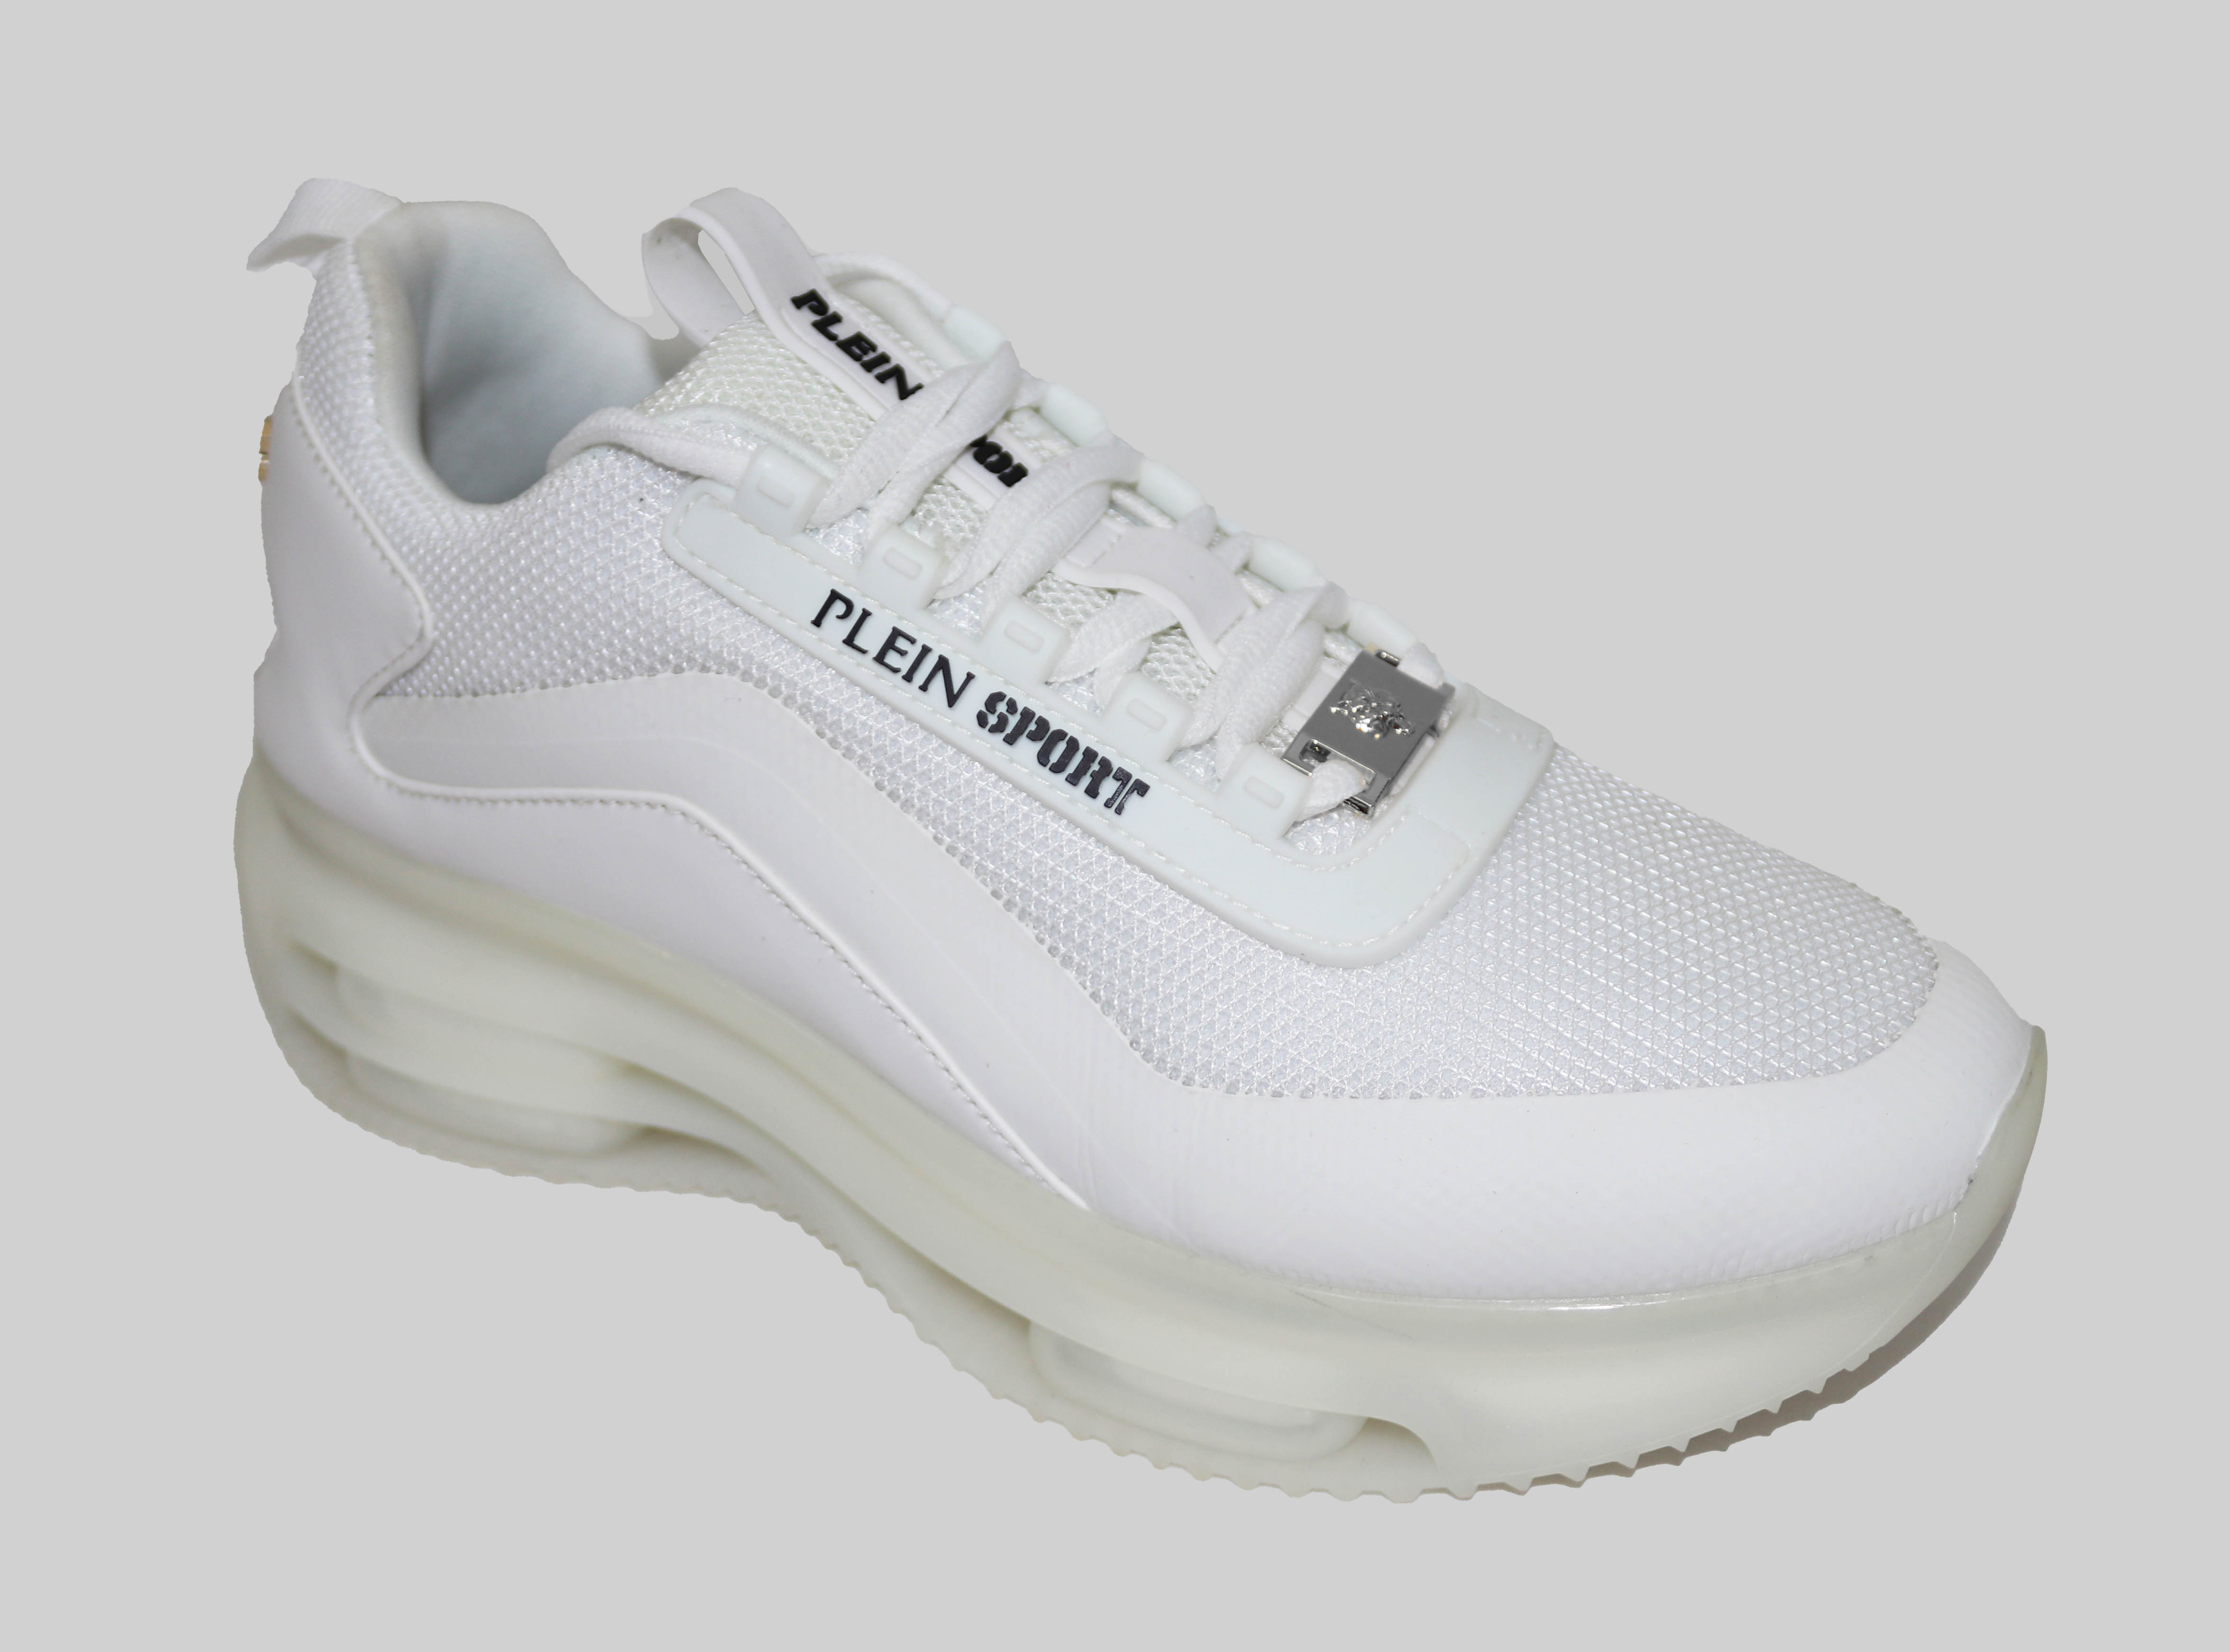 Plein Sport White Sneakers for Men - SIPS81101